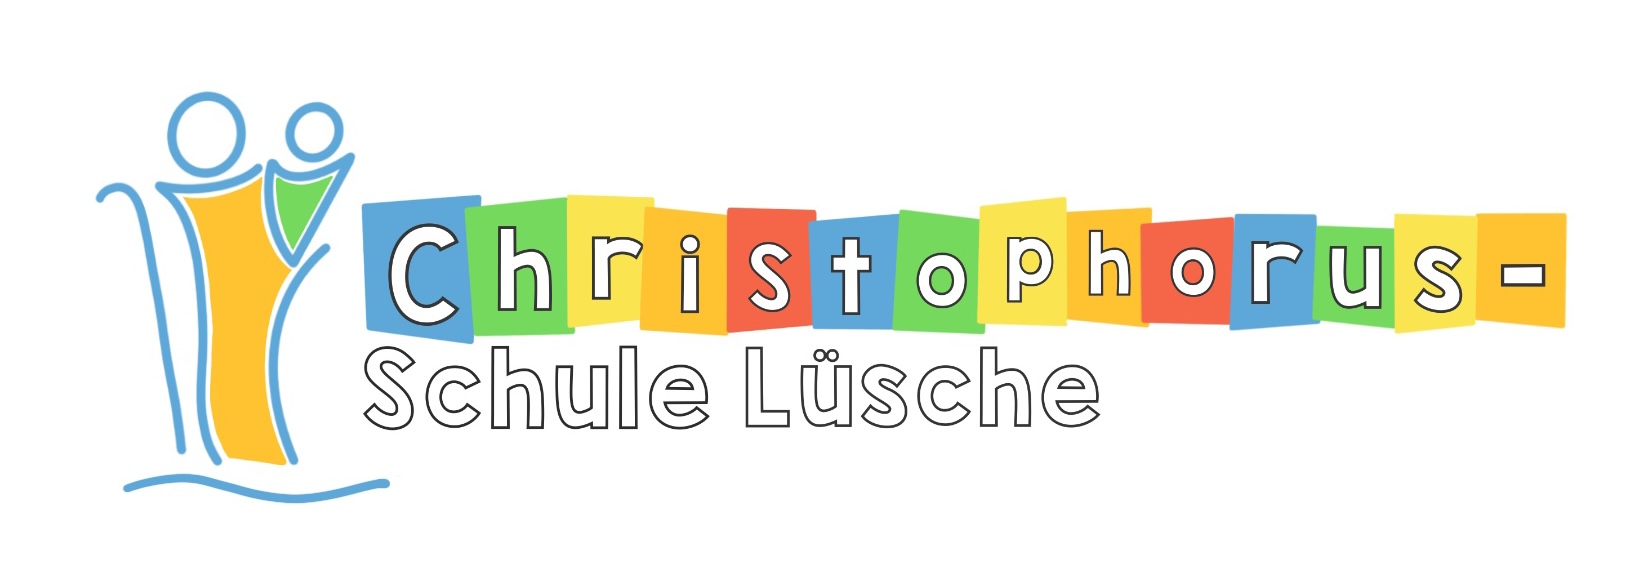 Christophorus-Schule Lüsche